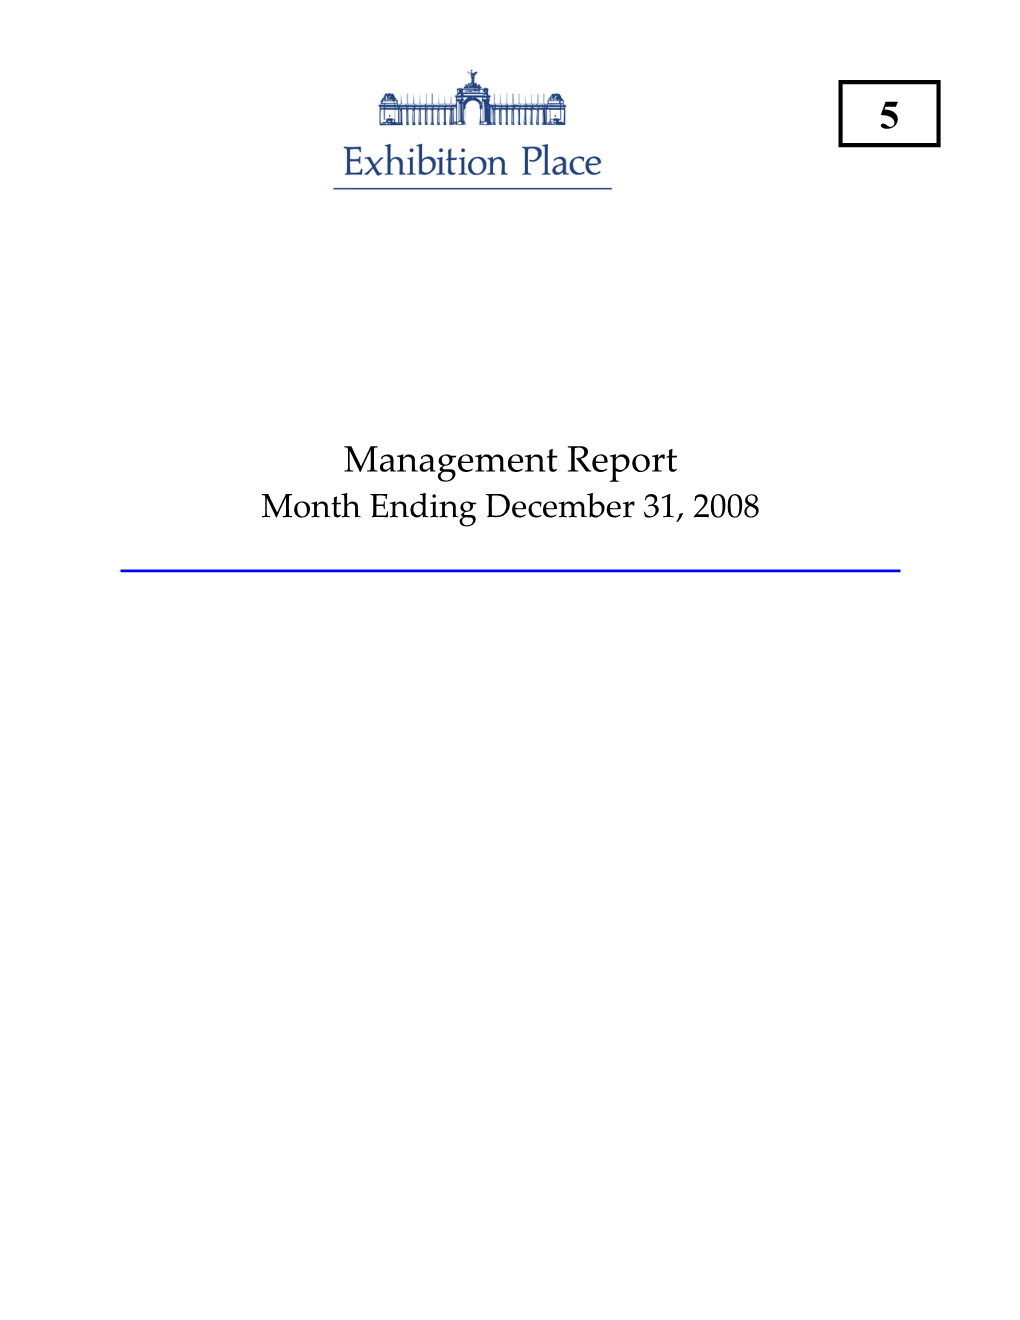 EP Management Report